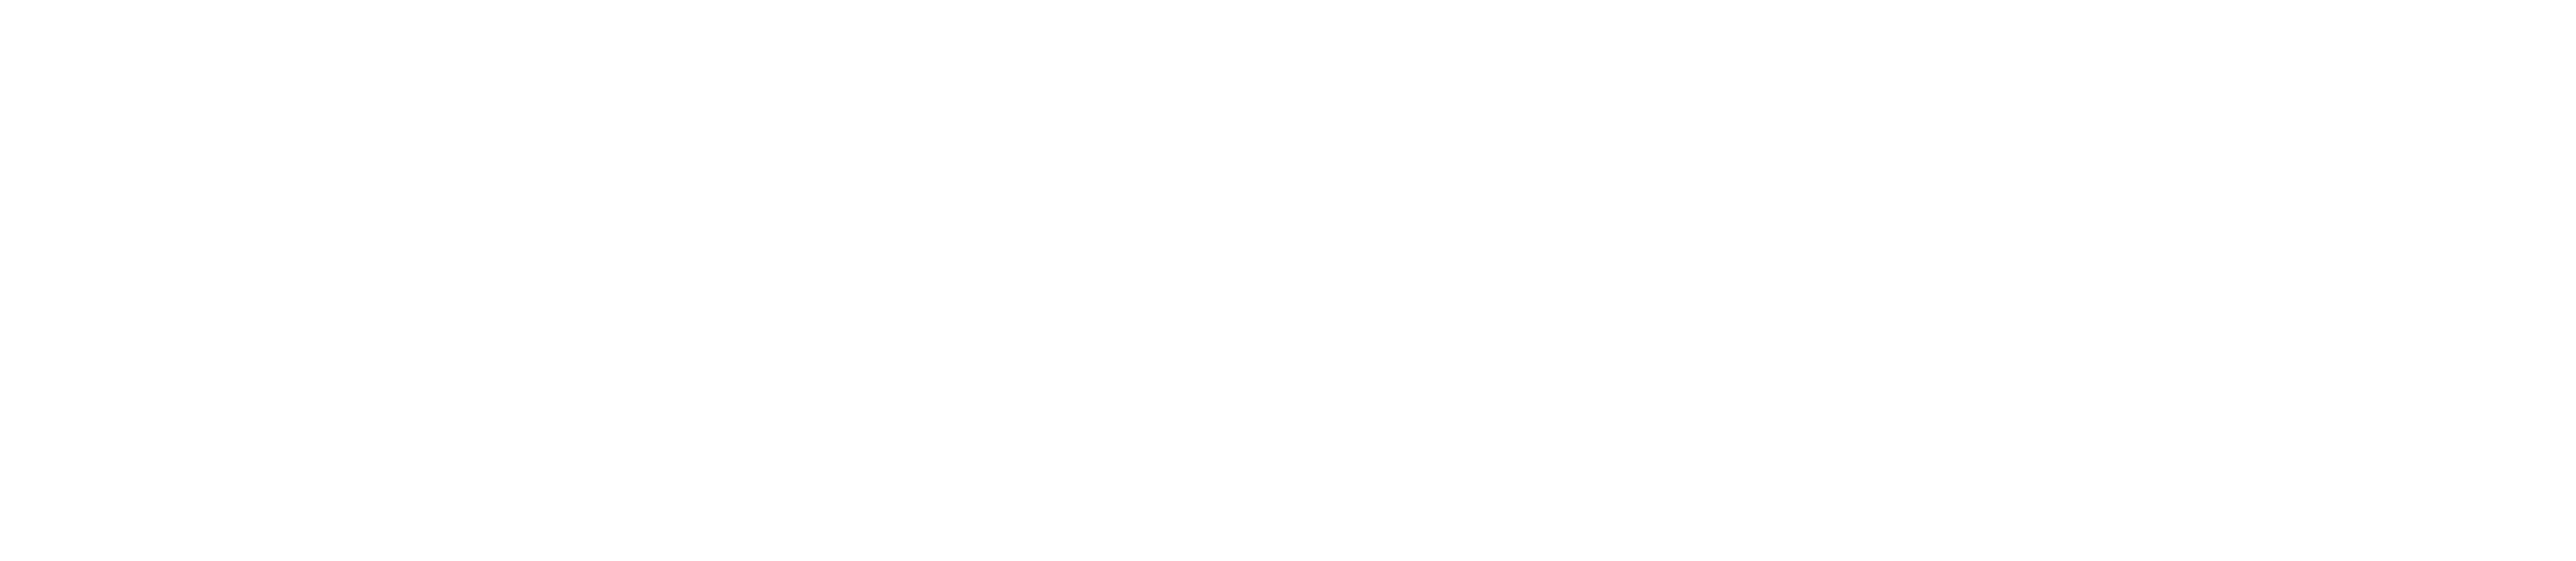 Pennsylvania Department of Community & Economic Development Logo